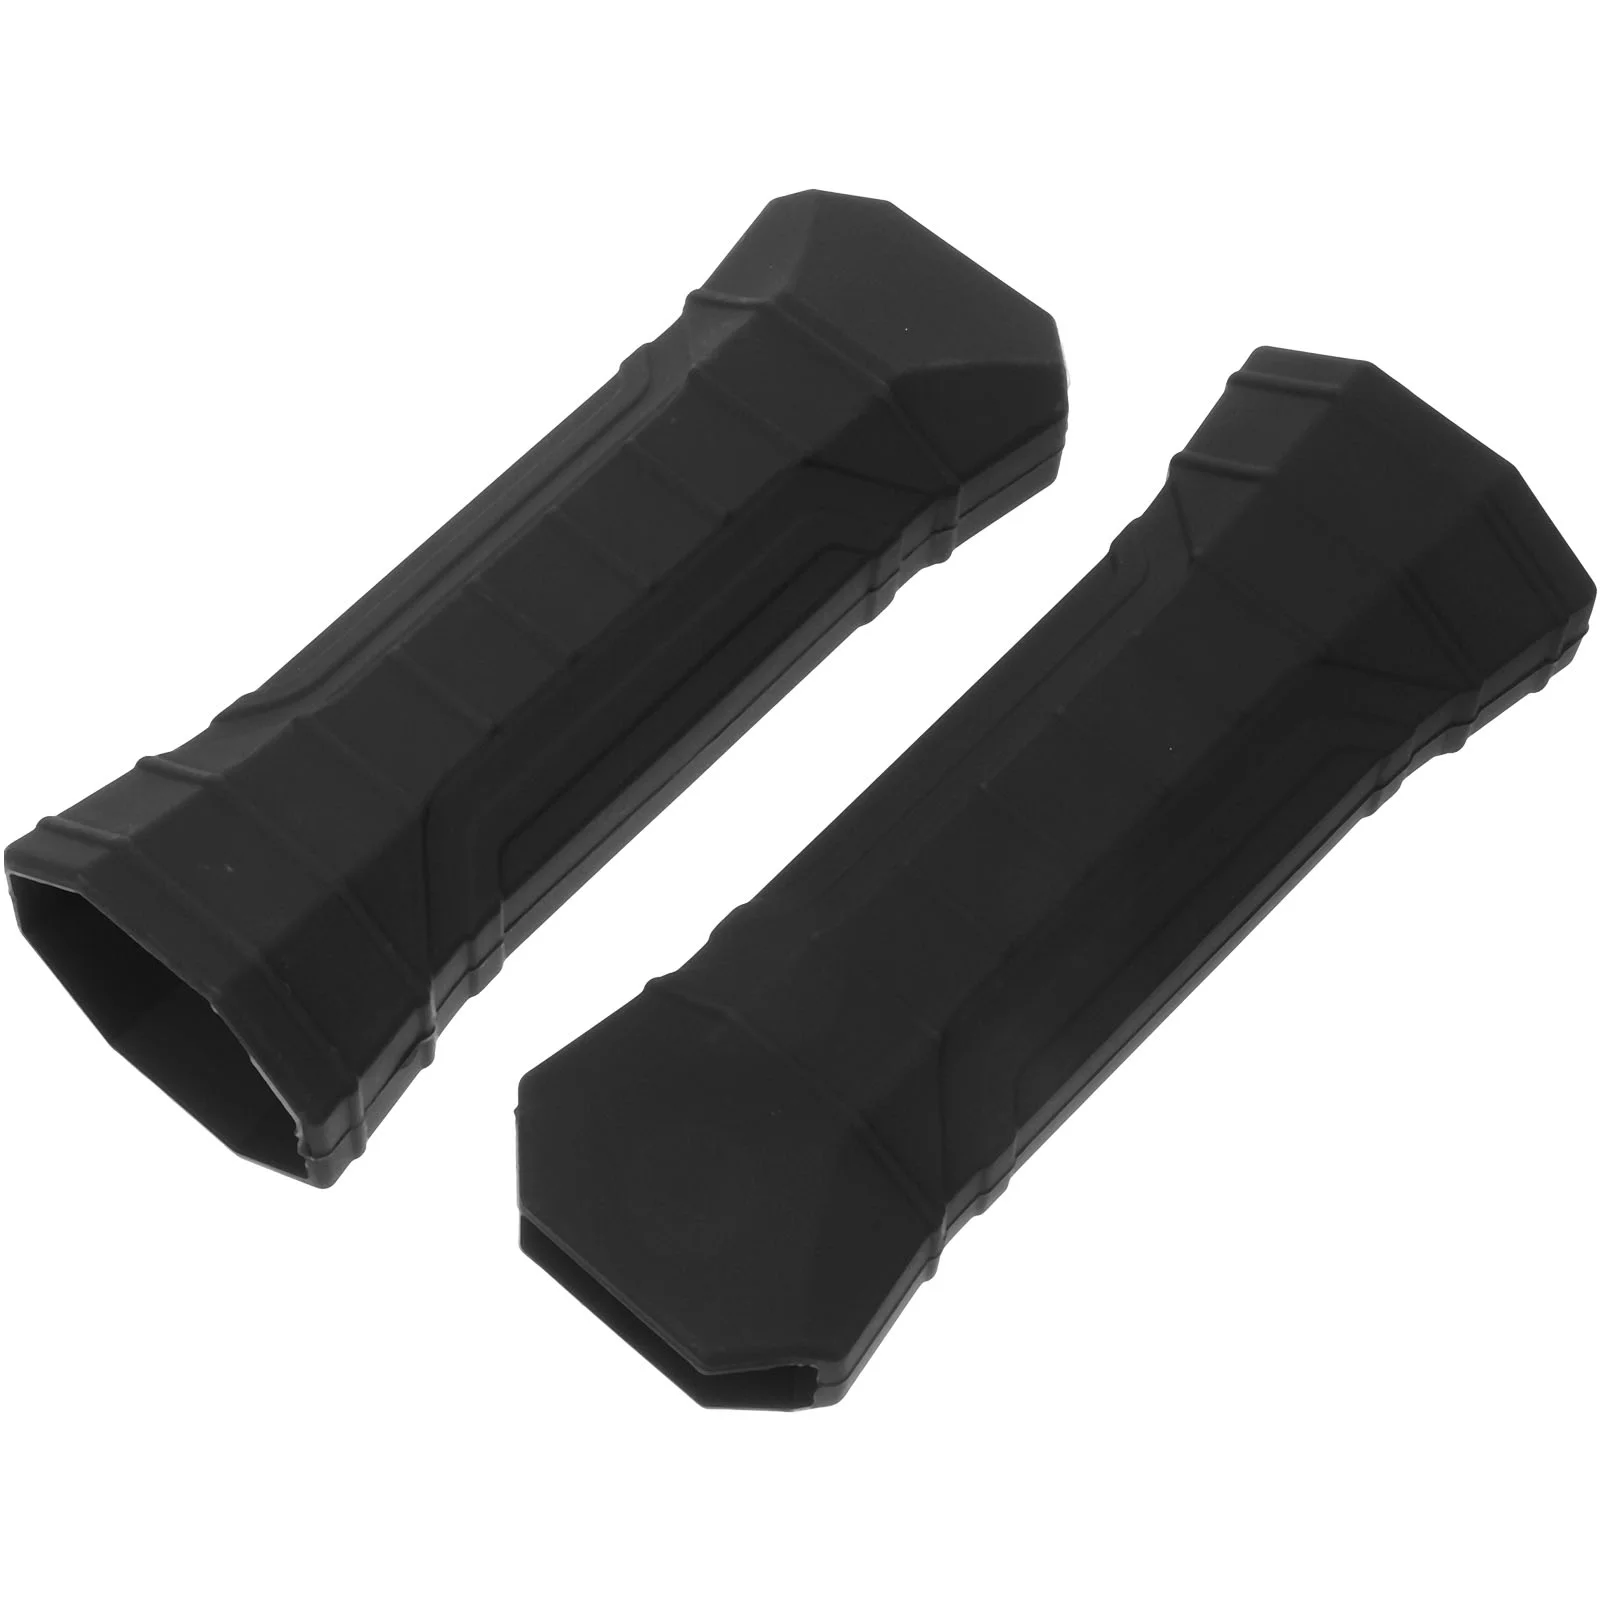 

2 Pcs Pickleball Racket Handle Anti-slipping Paddle Grip Sleeve Non-slip Cover Grips Silica Gel Kit